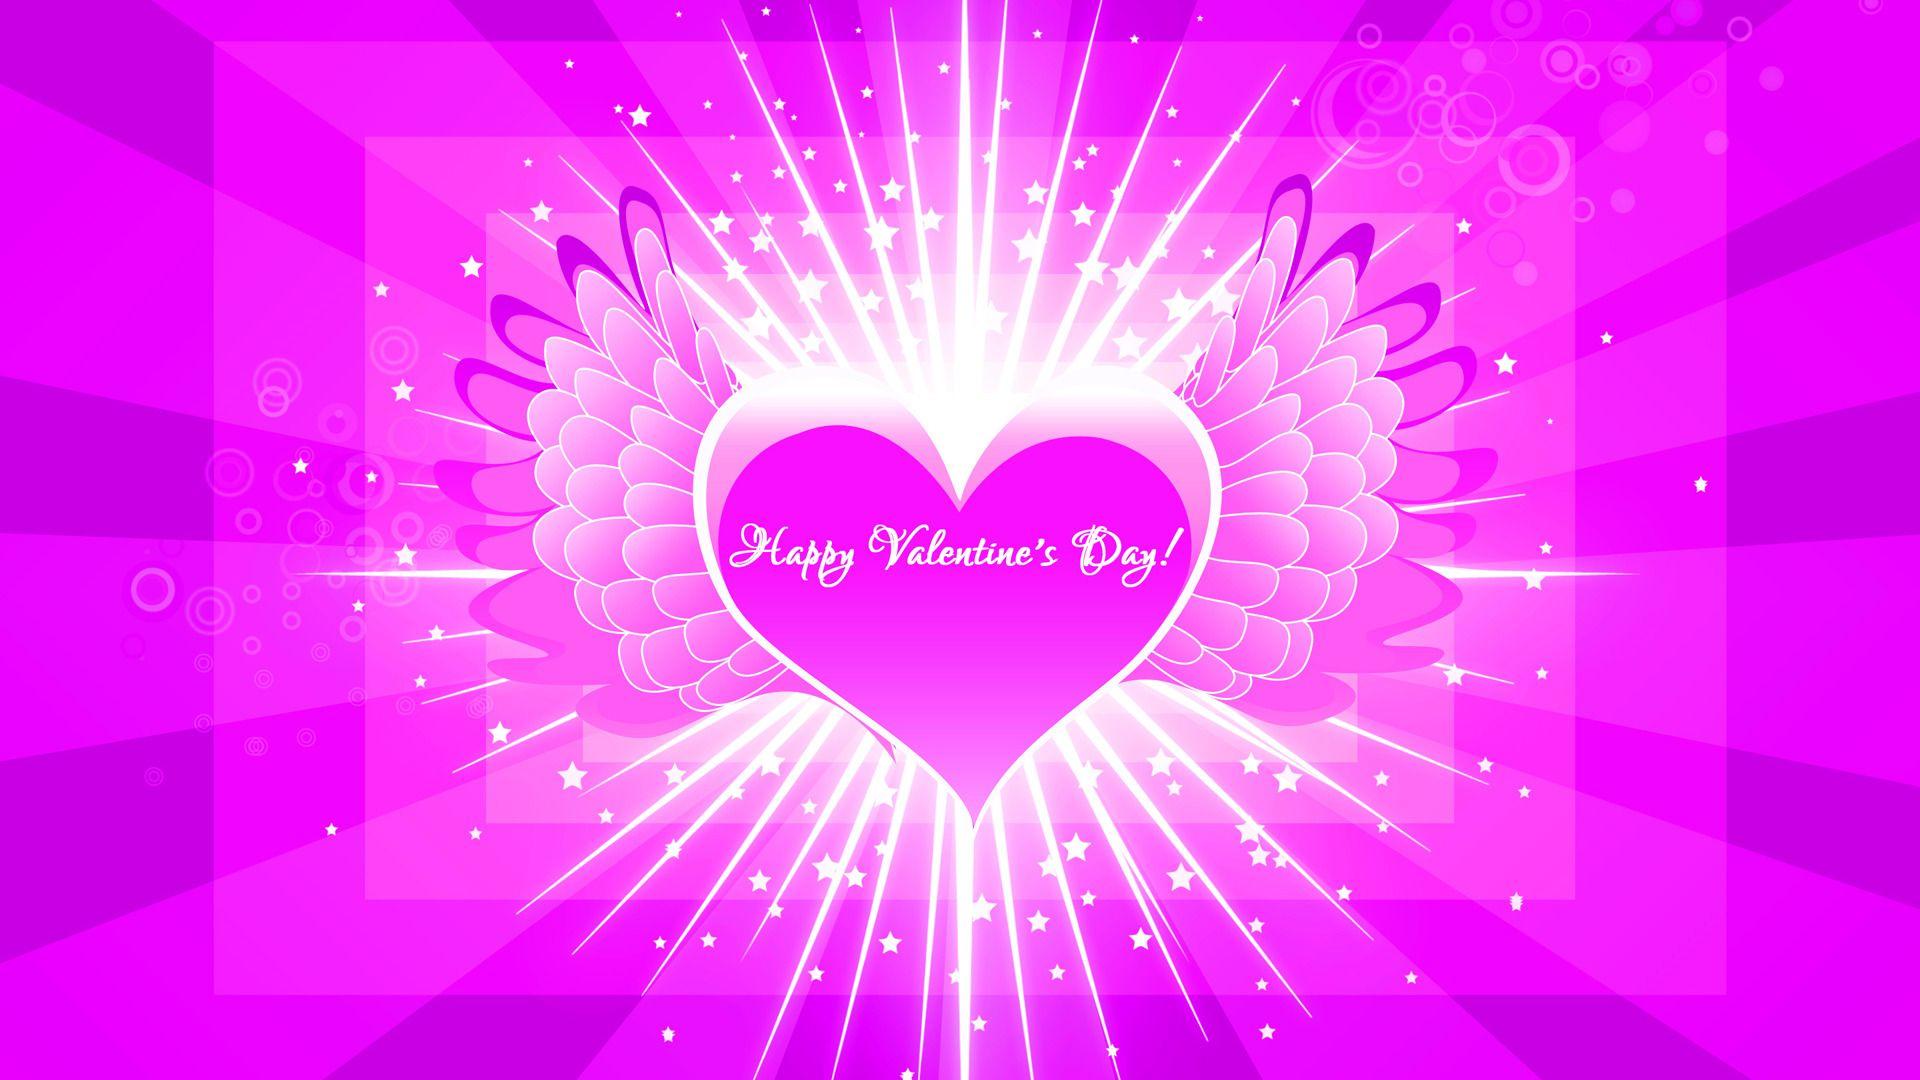 Best HD Valentine's Day Image for Mobile. PC. Desktop